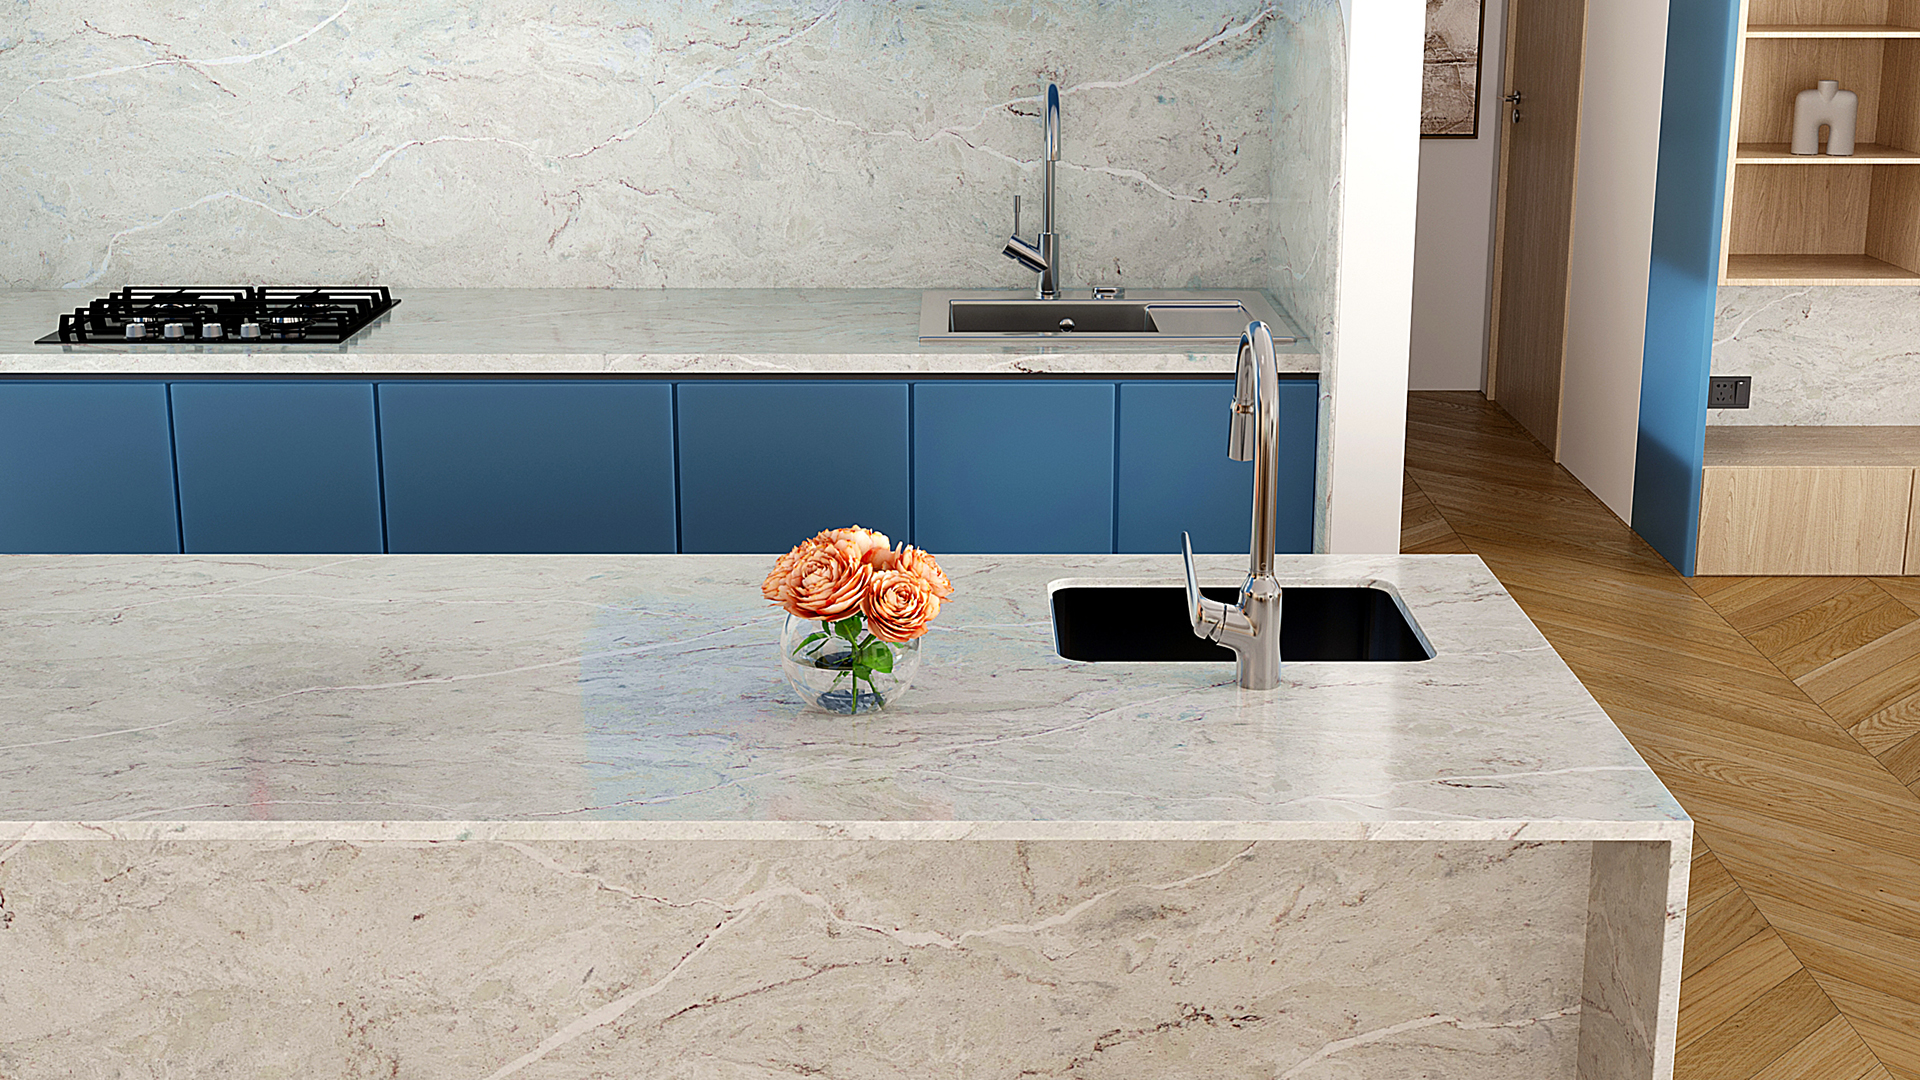 Kitchen countertops made with Vicostone Verdelia quartz